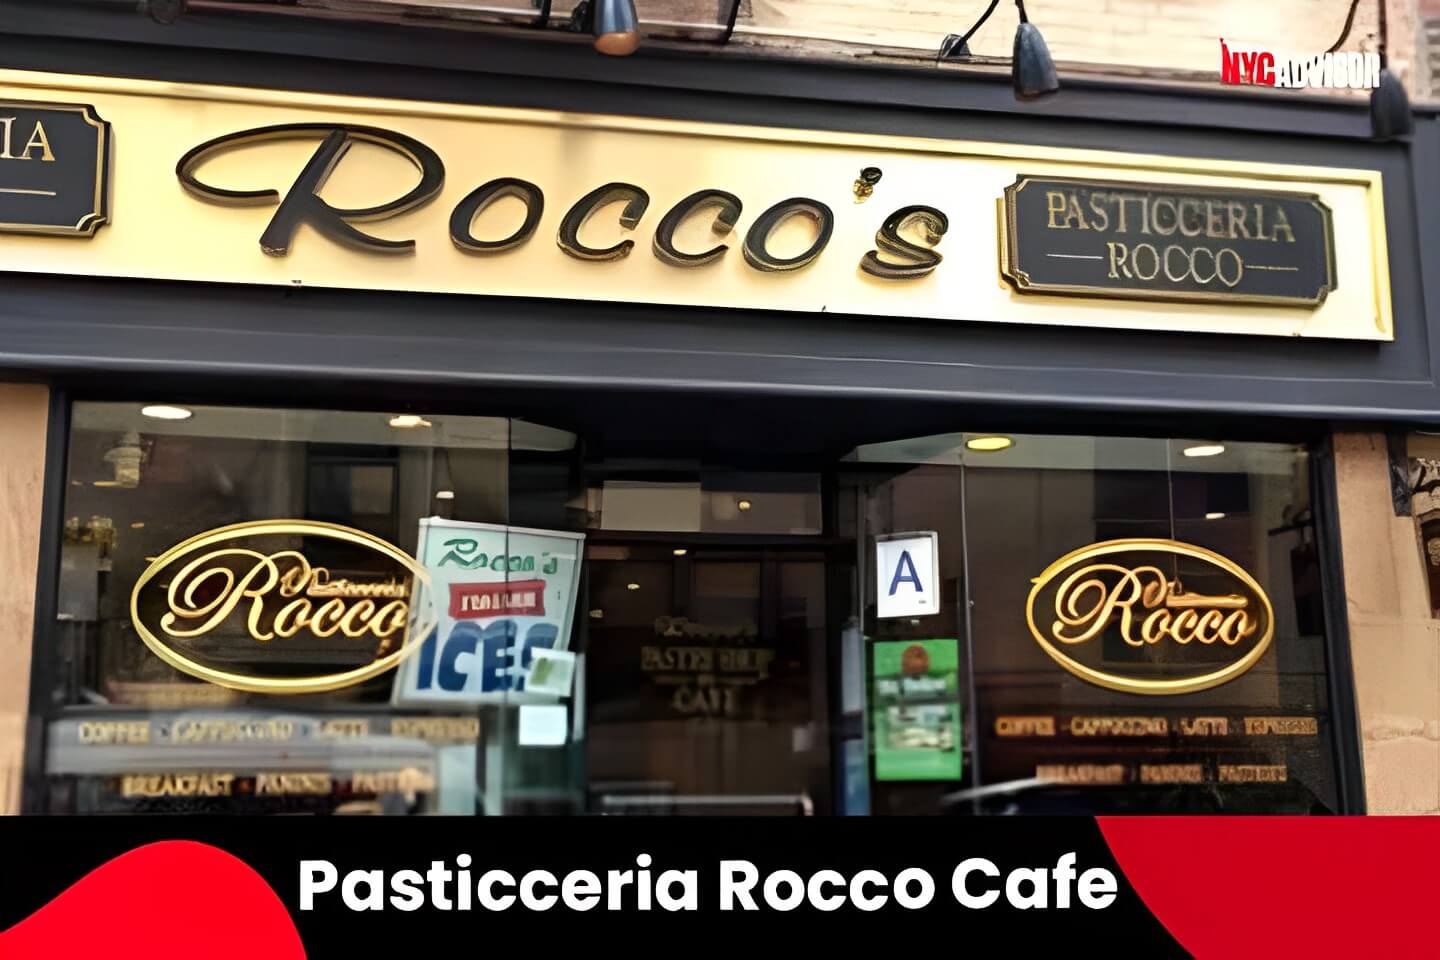 Pasticceria Rocco Cafe in New York City